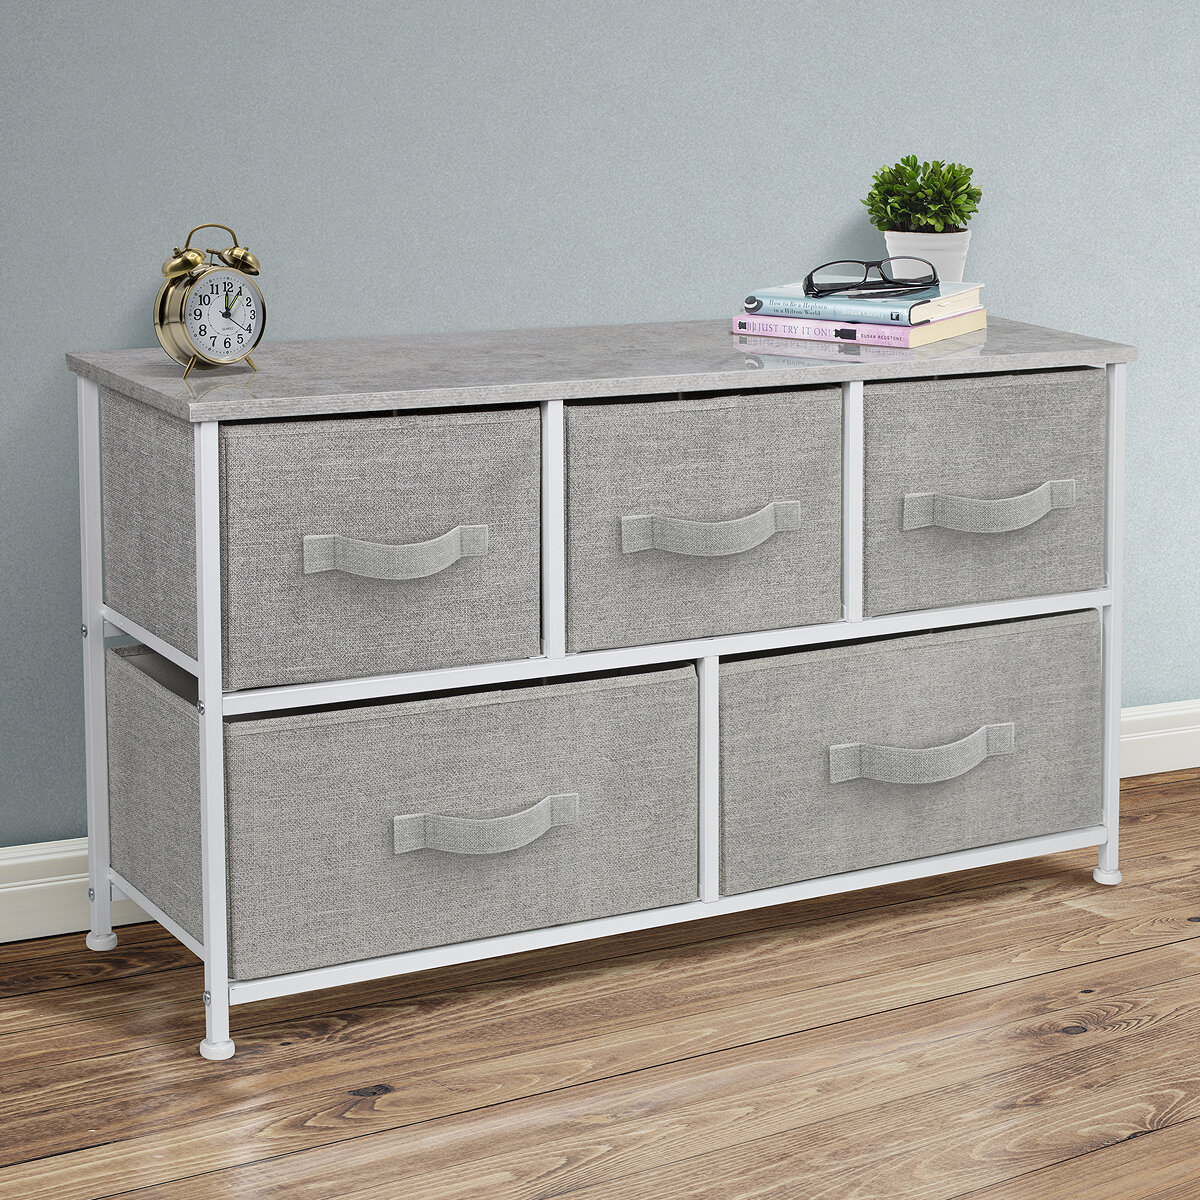 Ebern Designs Bayly 5 Drawer Dresser Reviews Wayfair Ca